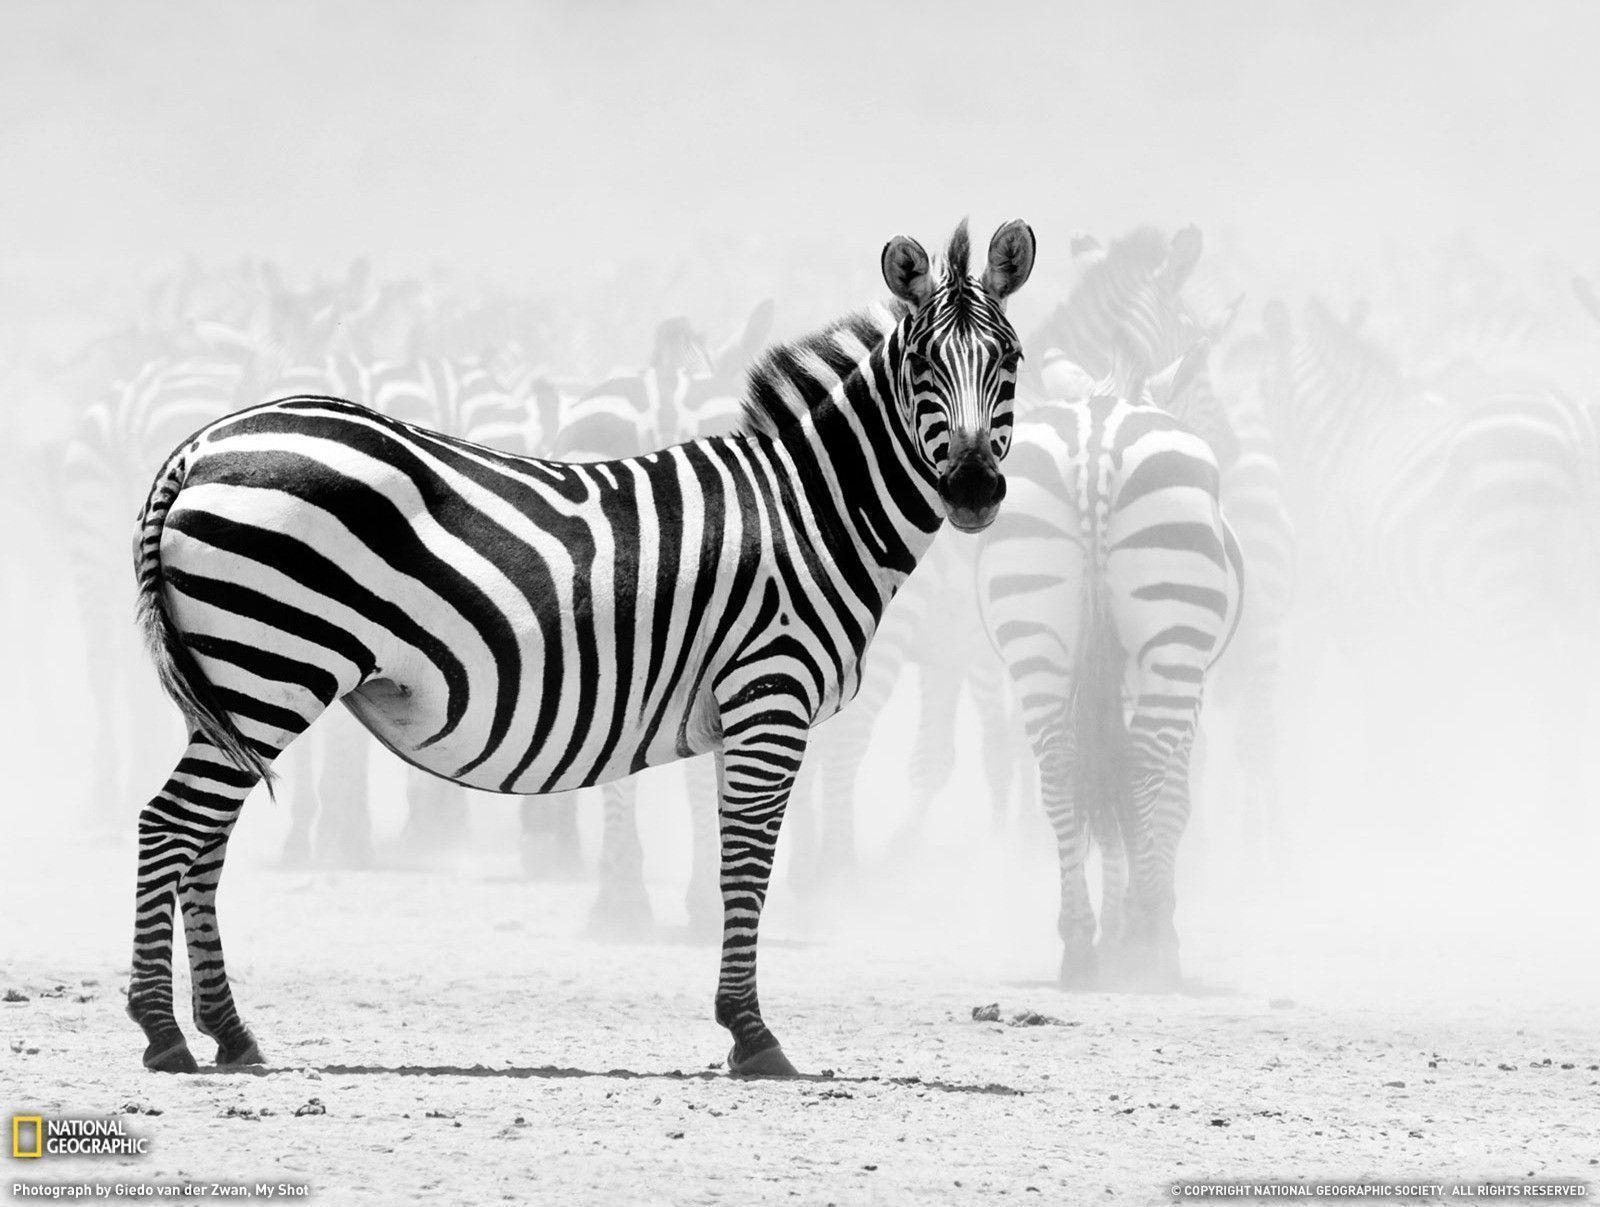 Zebra desktop wallpaper. HD Nature Wallpaper